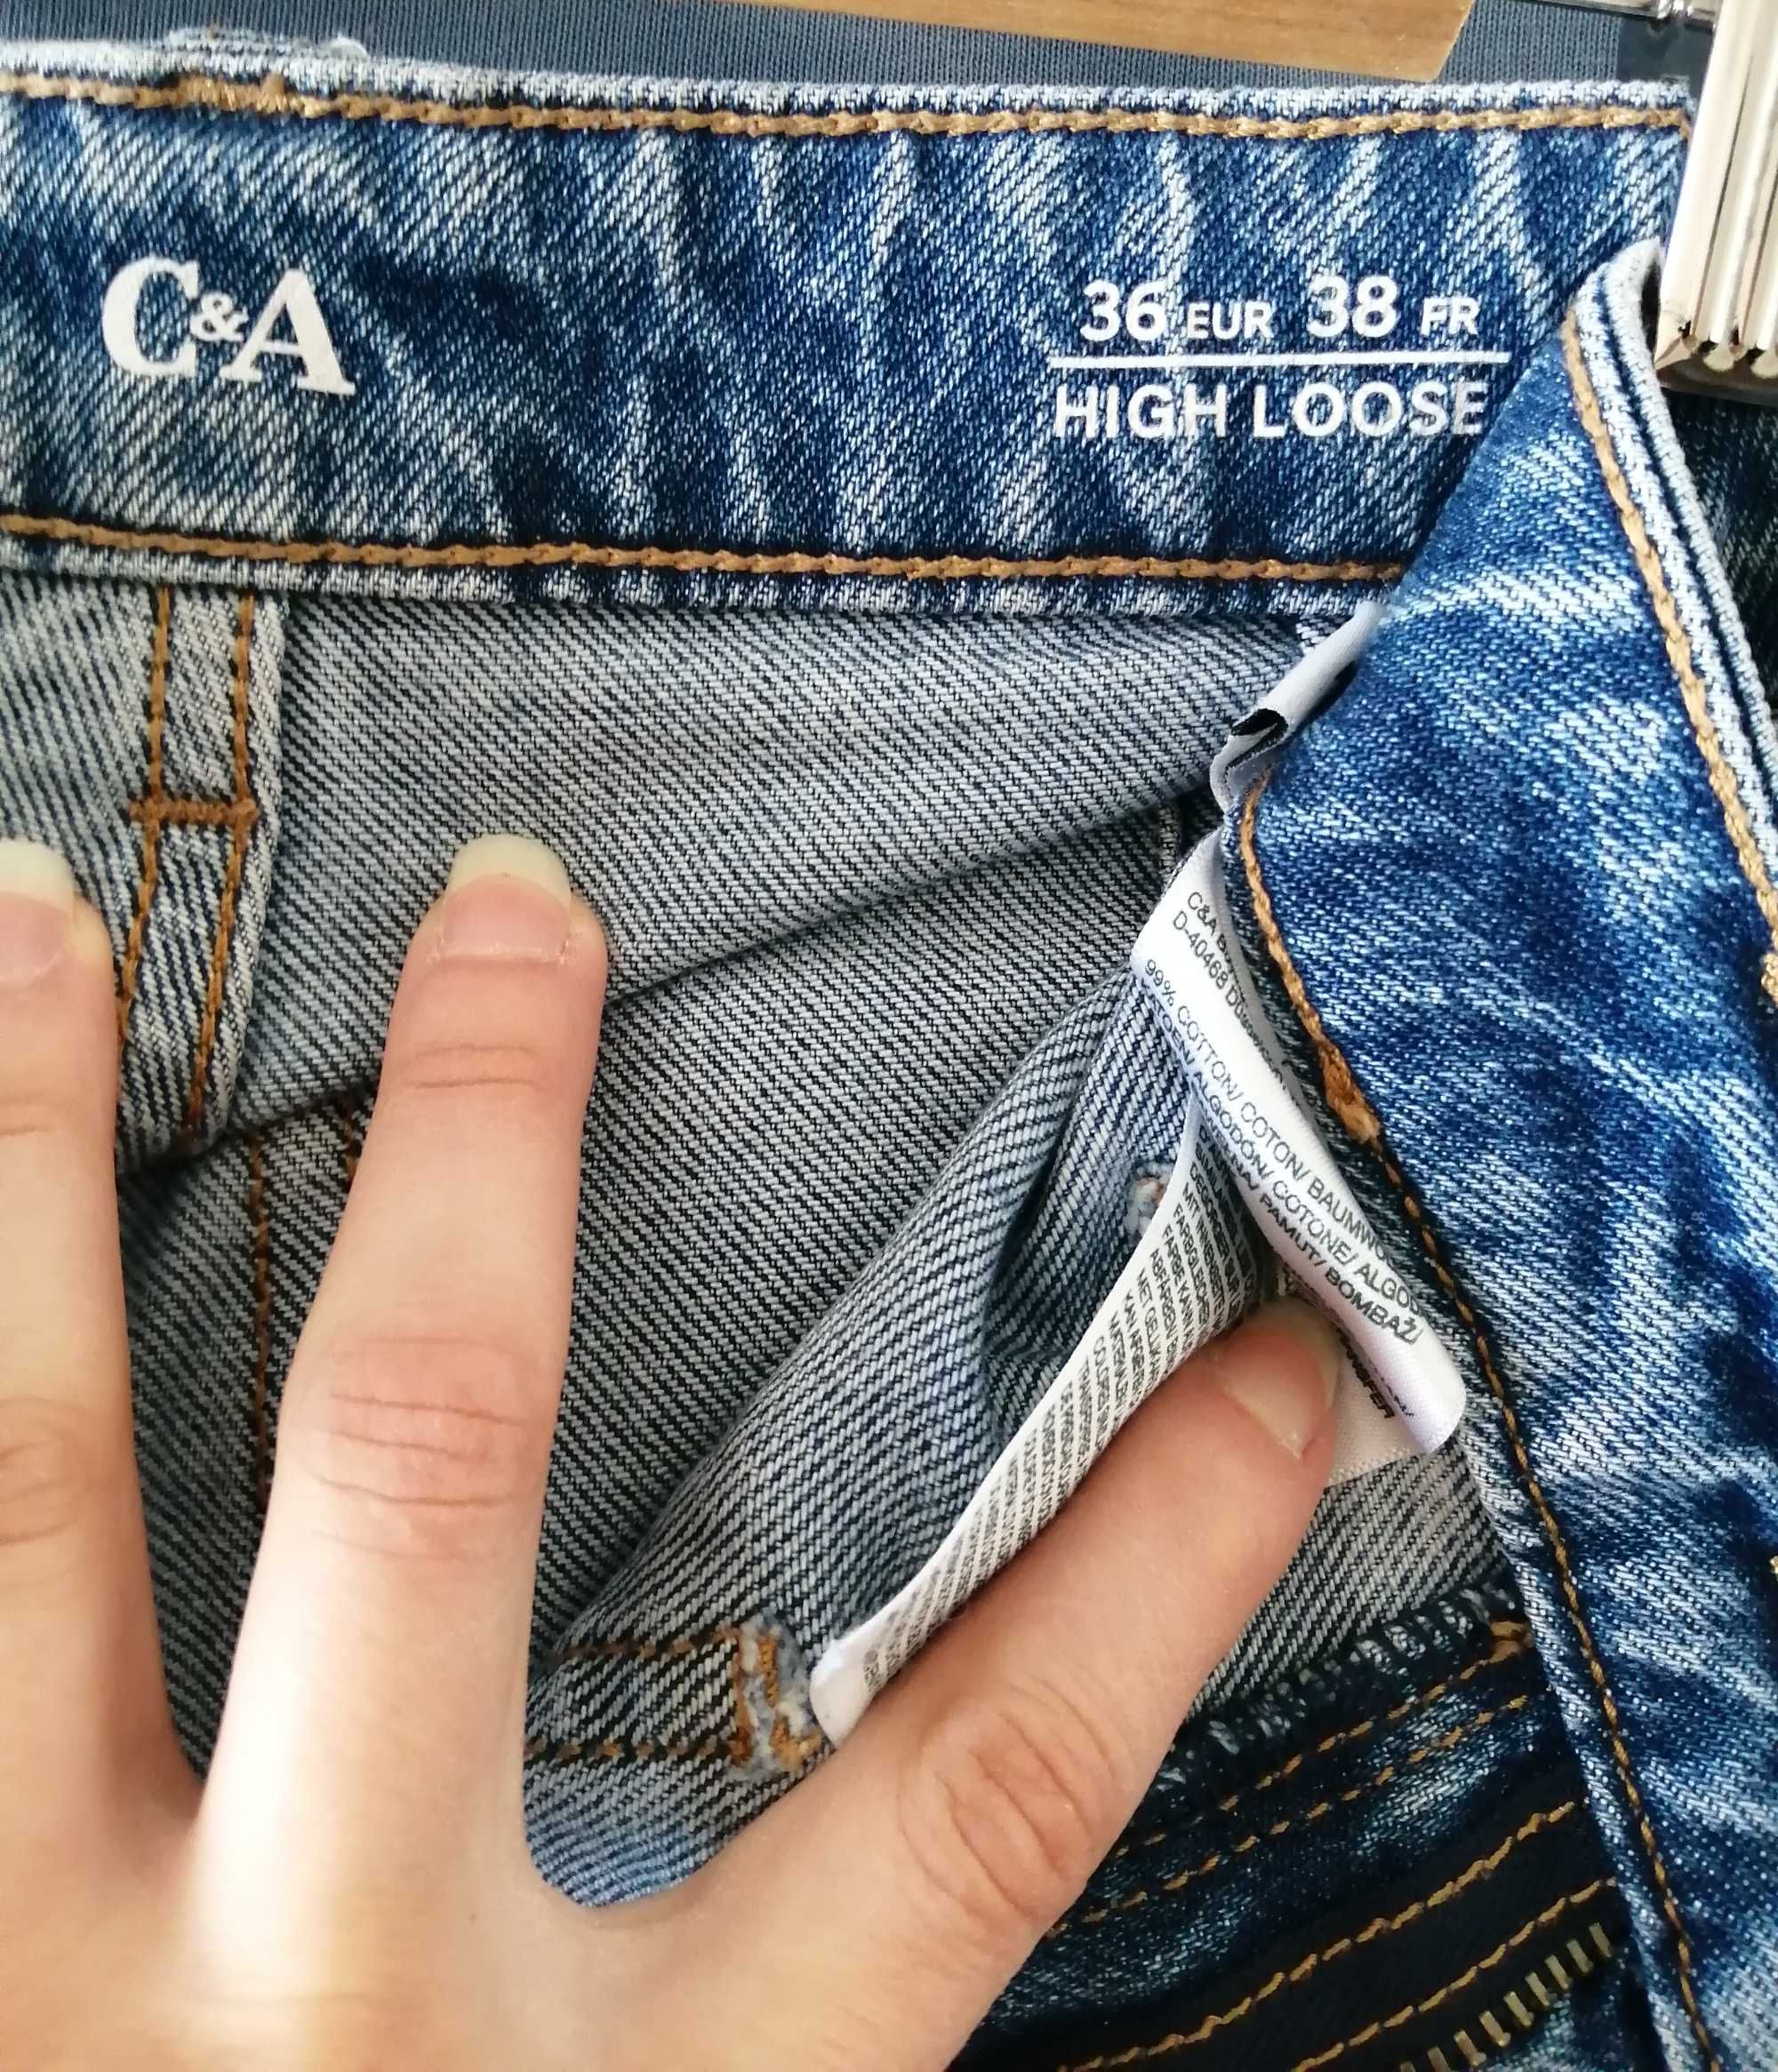 Blugi jeans dama C&A largi high loose masura 36